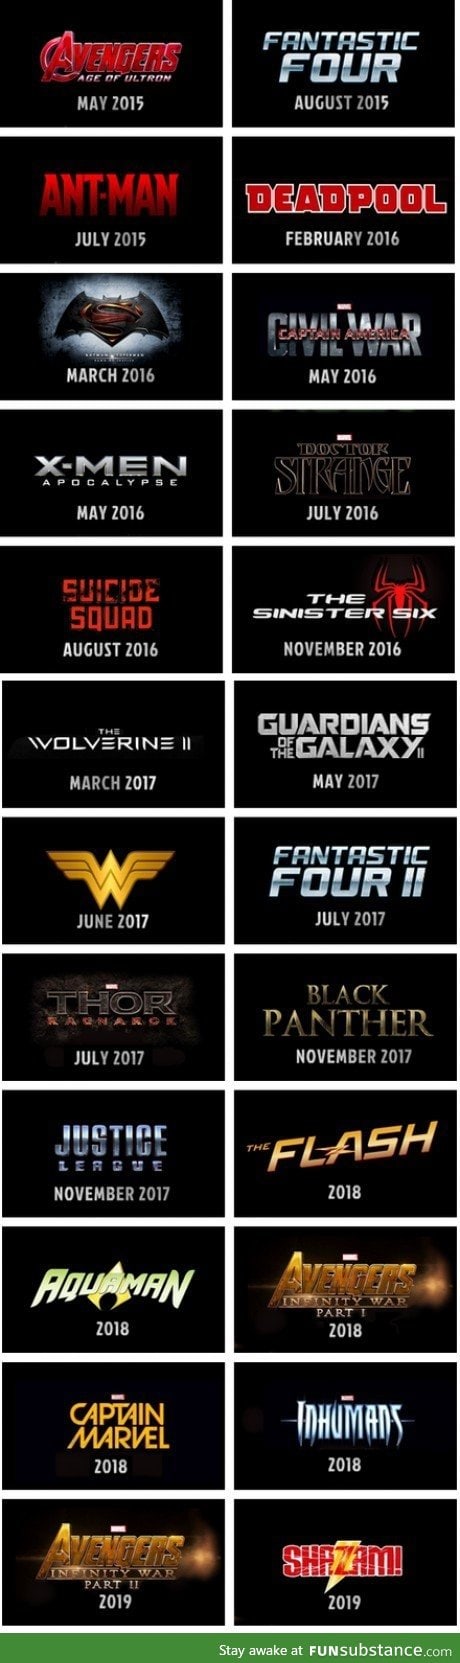 Marvel, DC, Fox, Sony...The full superhero movie lineup